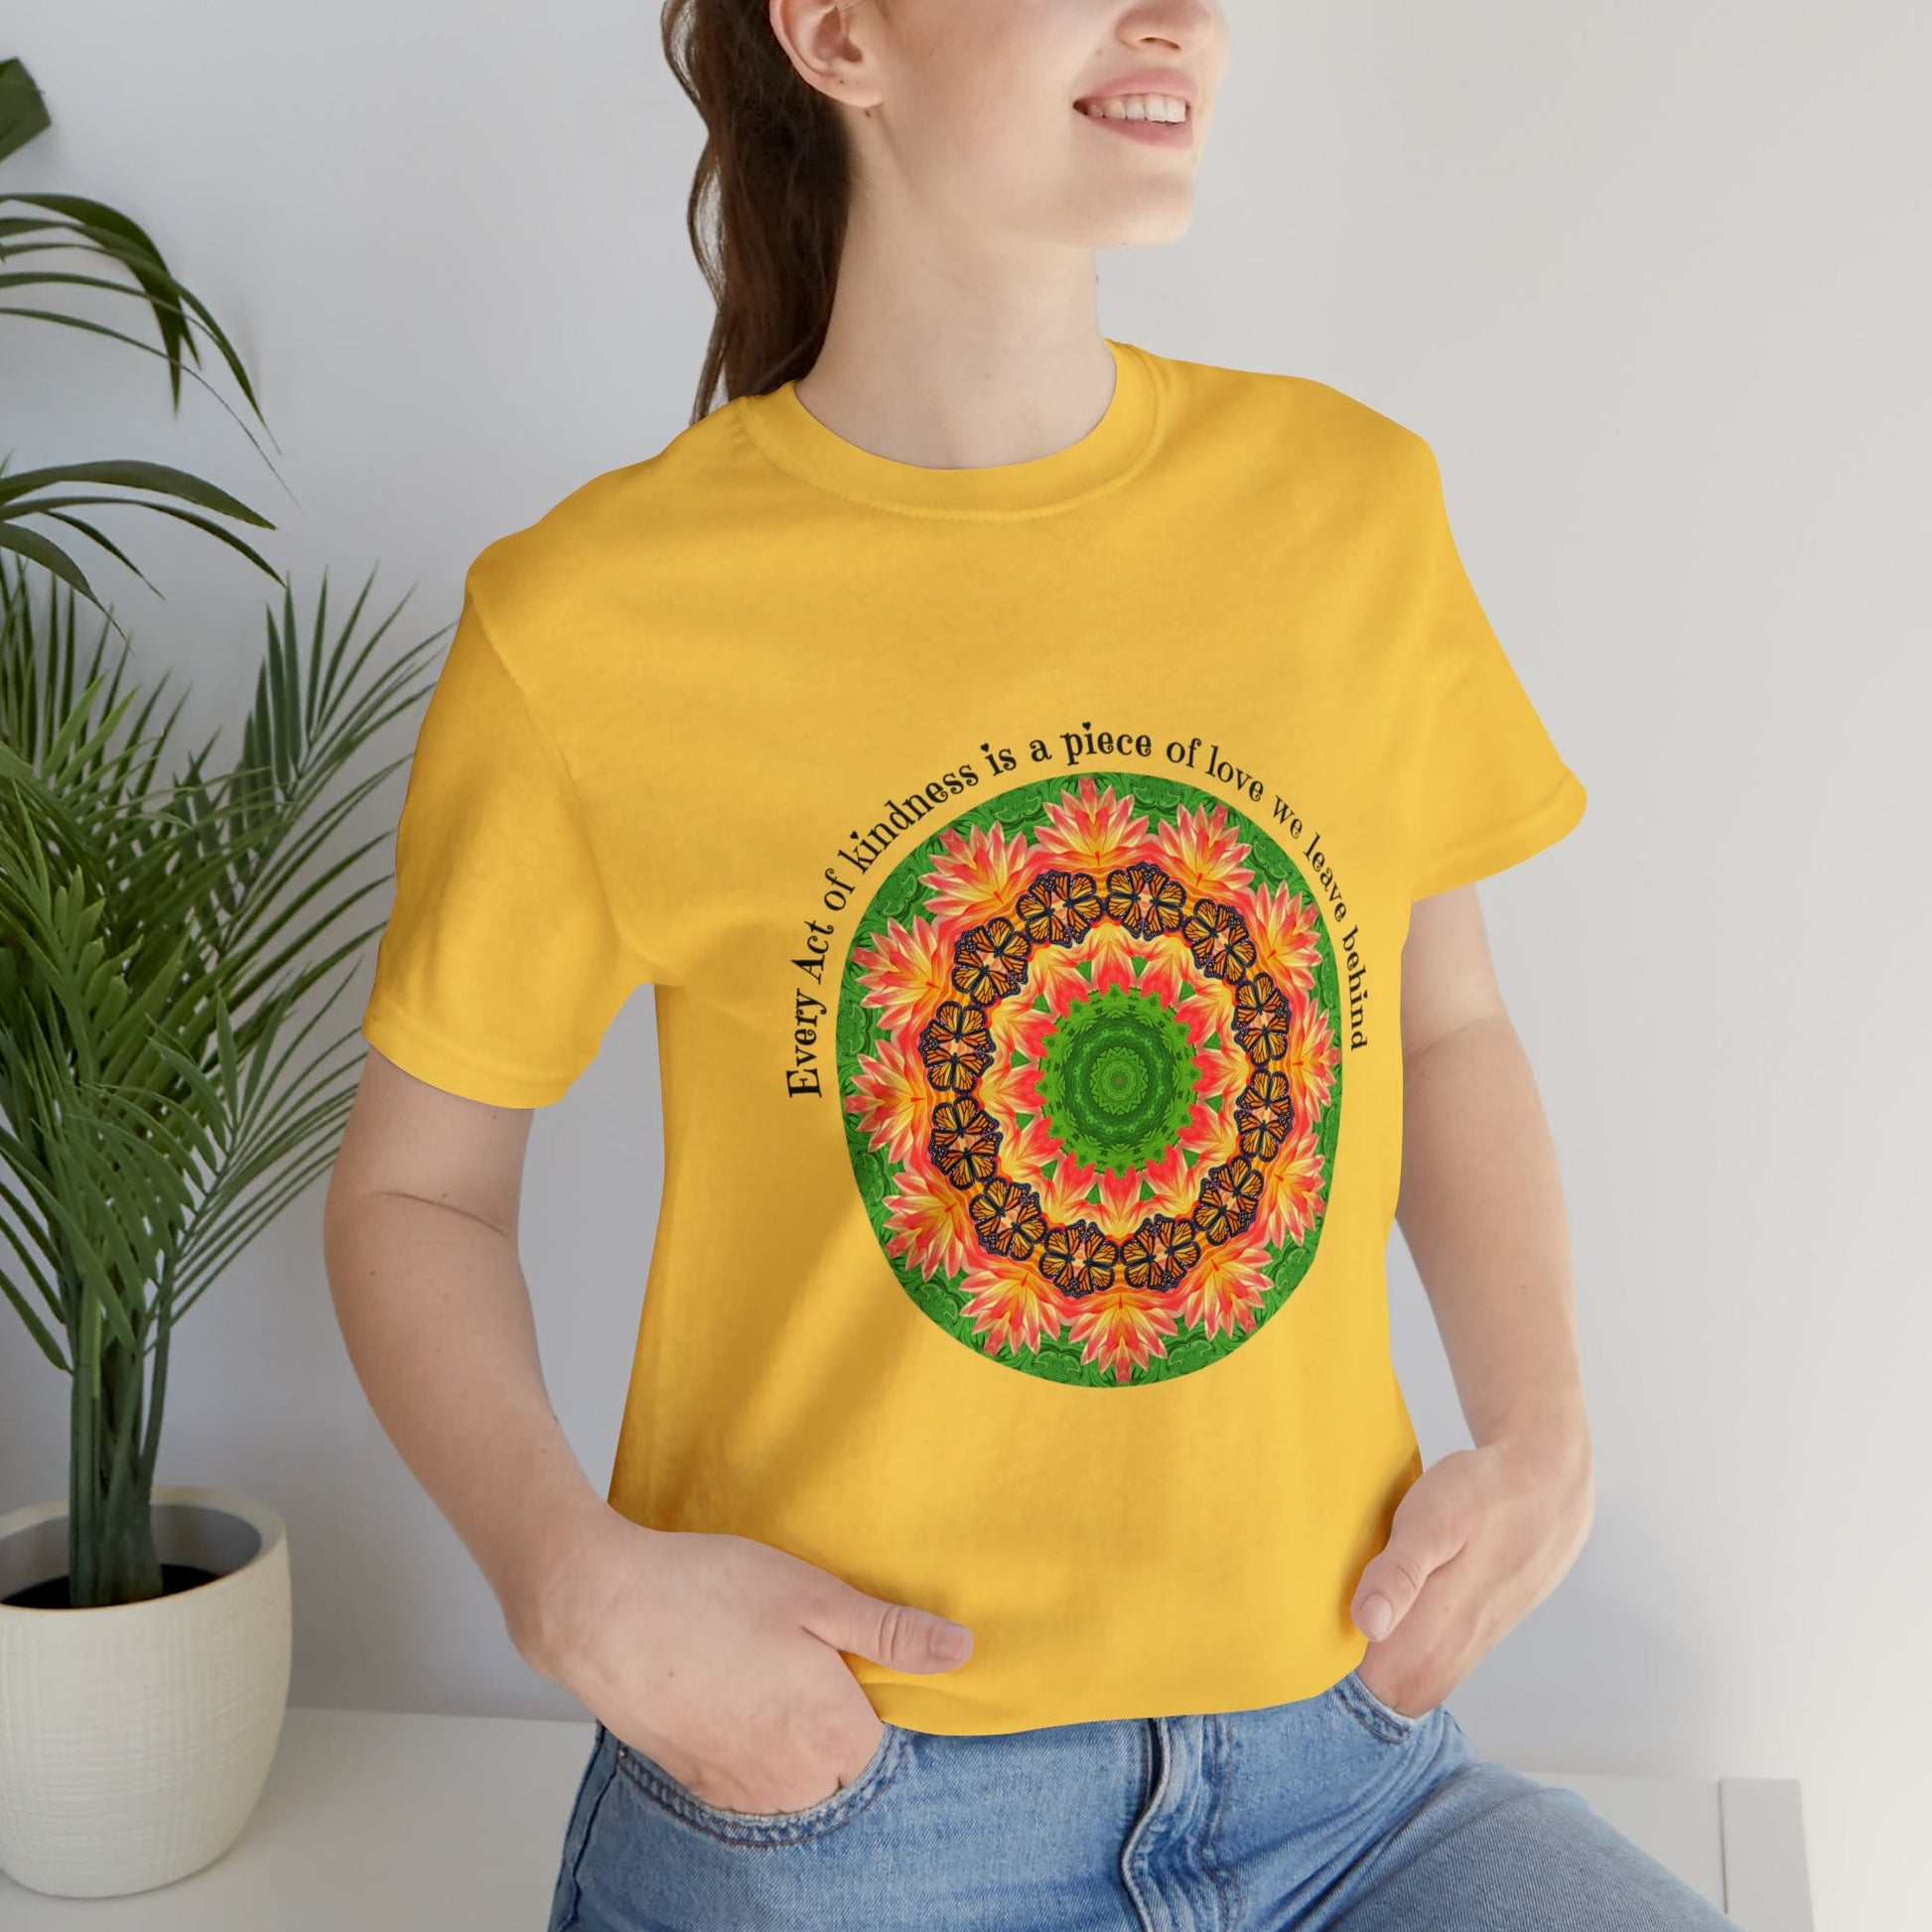 Beautiful Butterfly Mandala Art Graphic Tee Shirt - Cottagecore Clothing A Nature Lovers Delight Ornate Orbit yellow